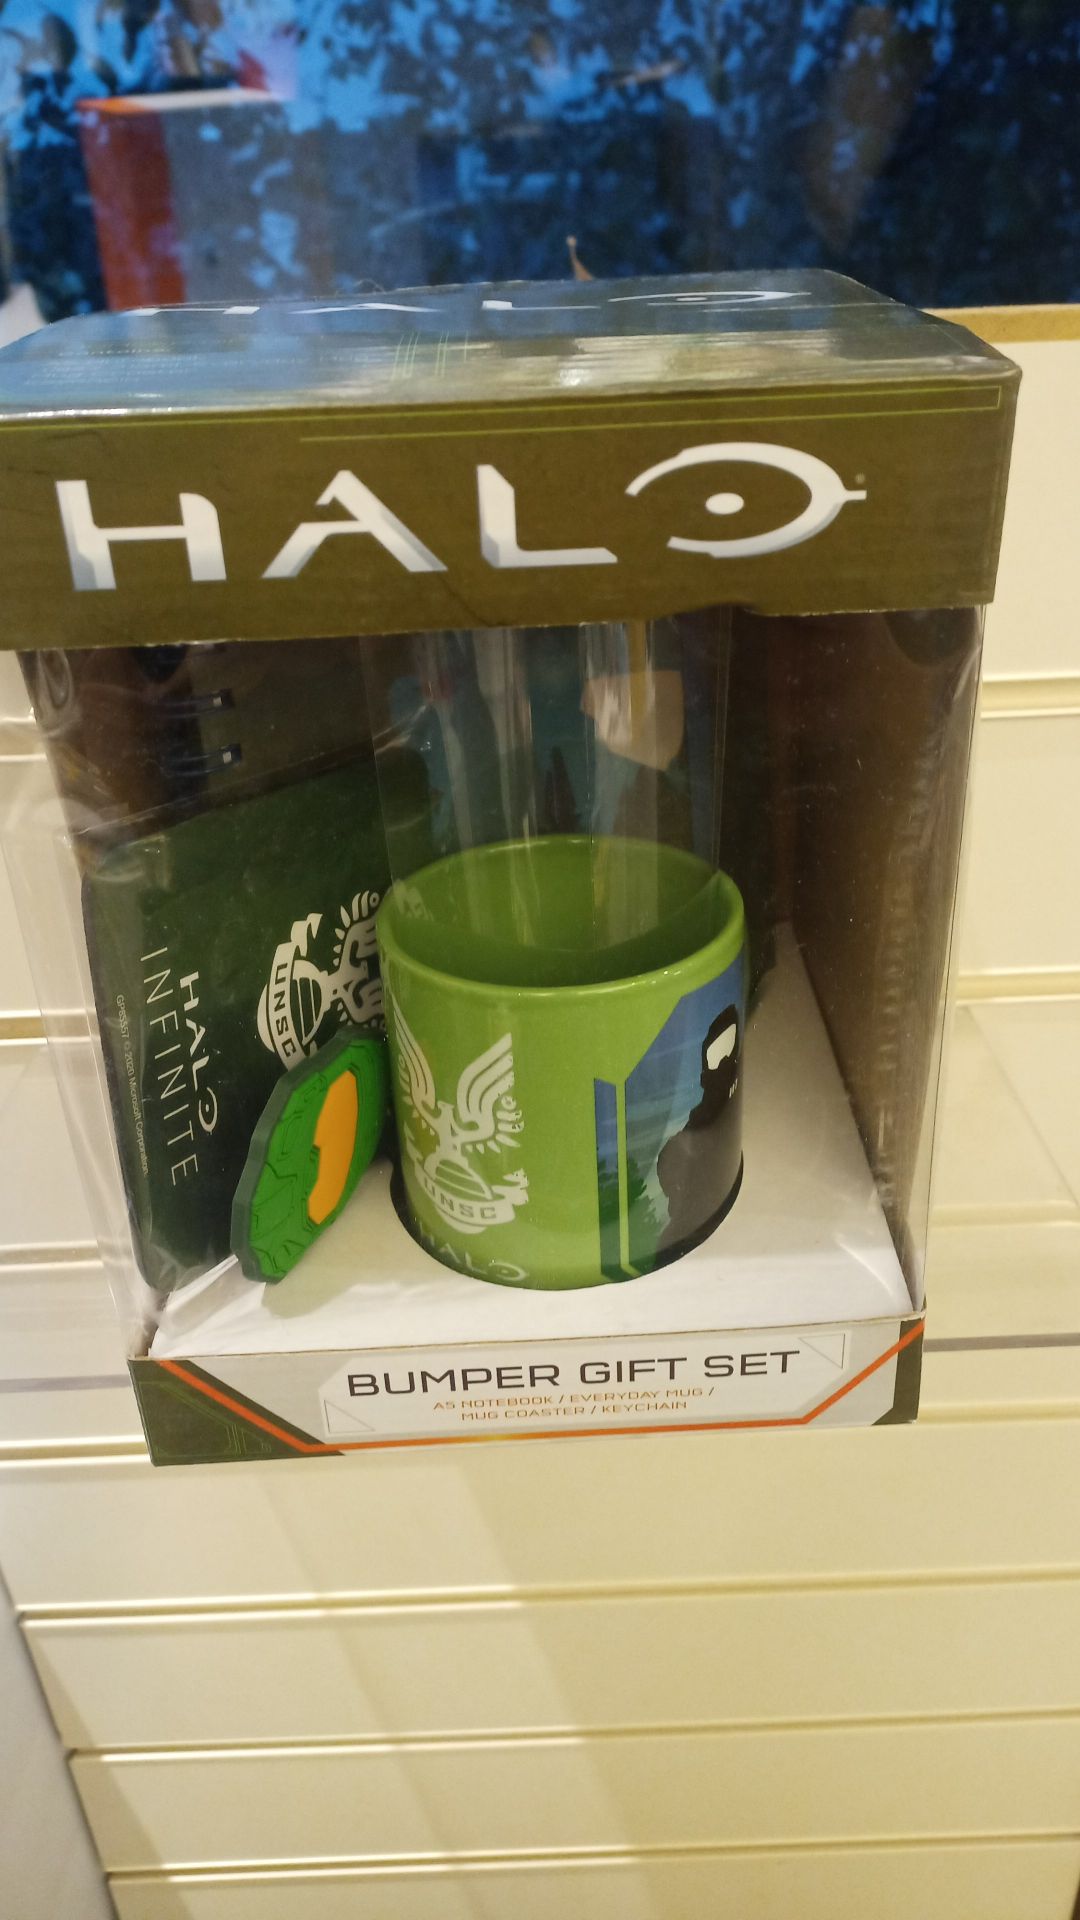 50pcs Brand new Halo Bumpoer Gift mug set contains mug, coaster, notebook - origional rrp £19.99